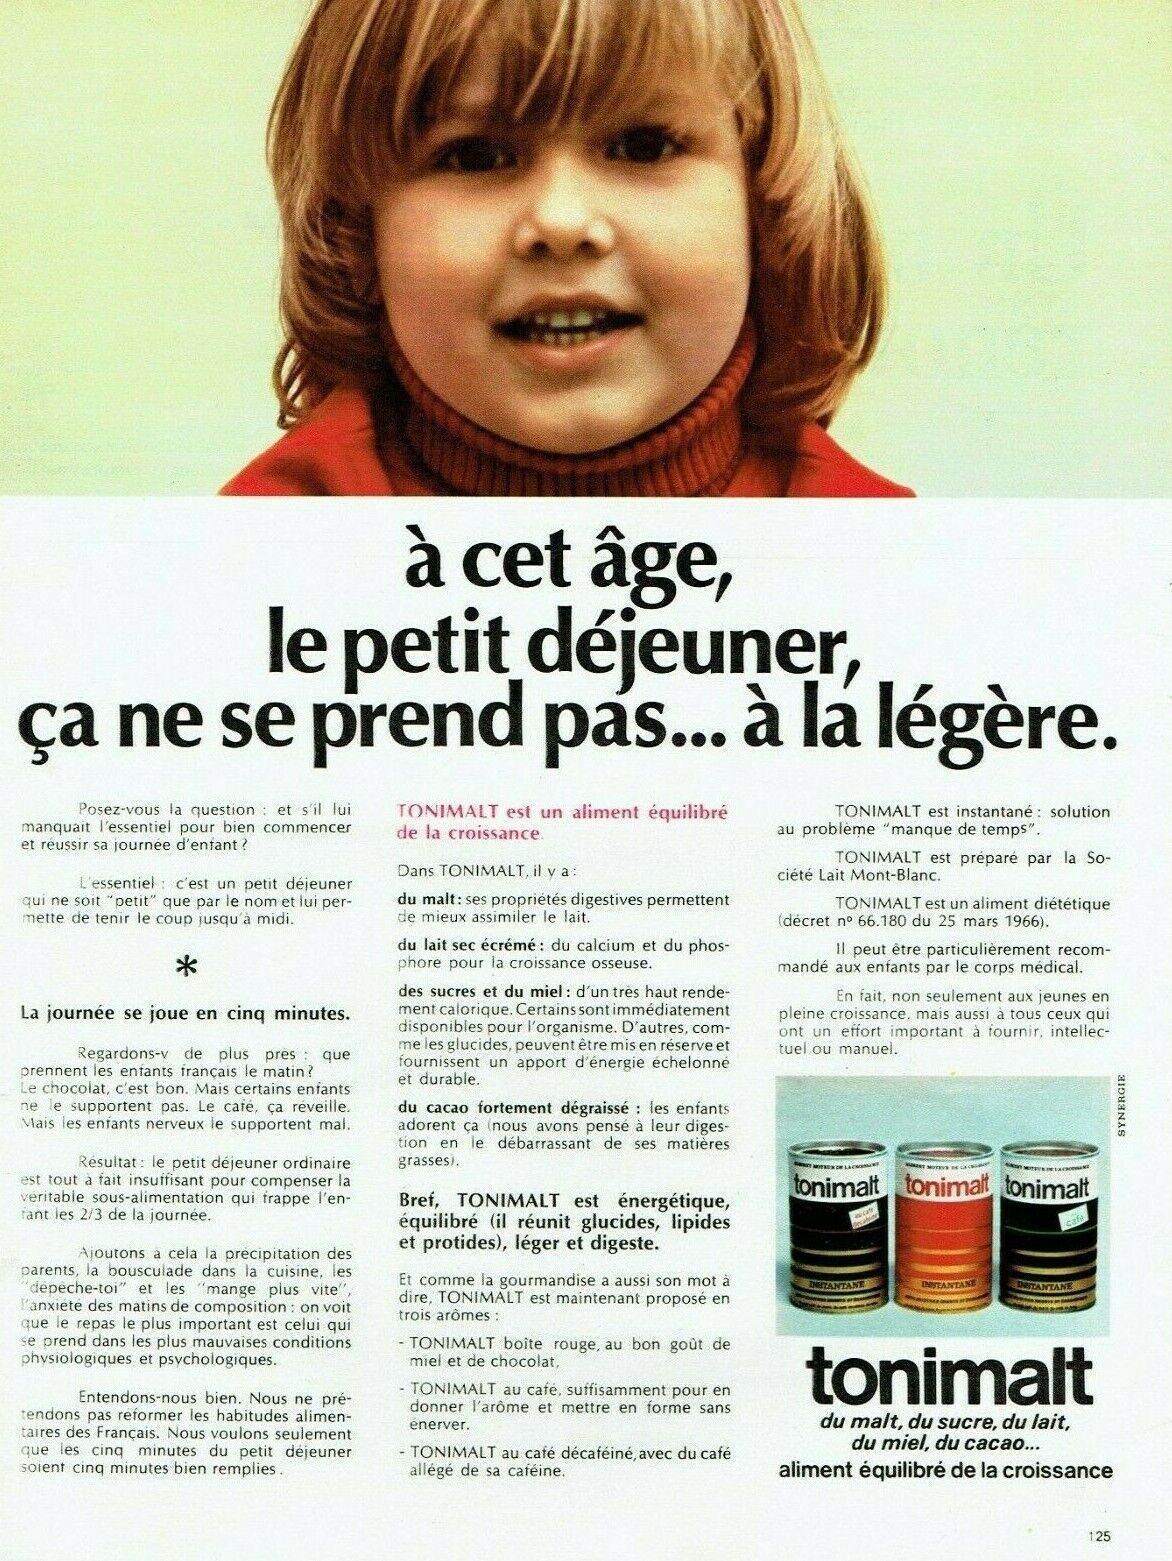  1971 Tonimalt Advertising 0422 Advertising Breakfast Does Not Take Light